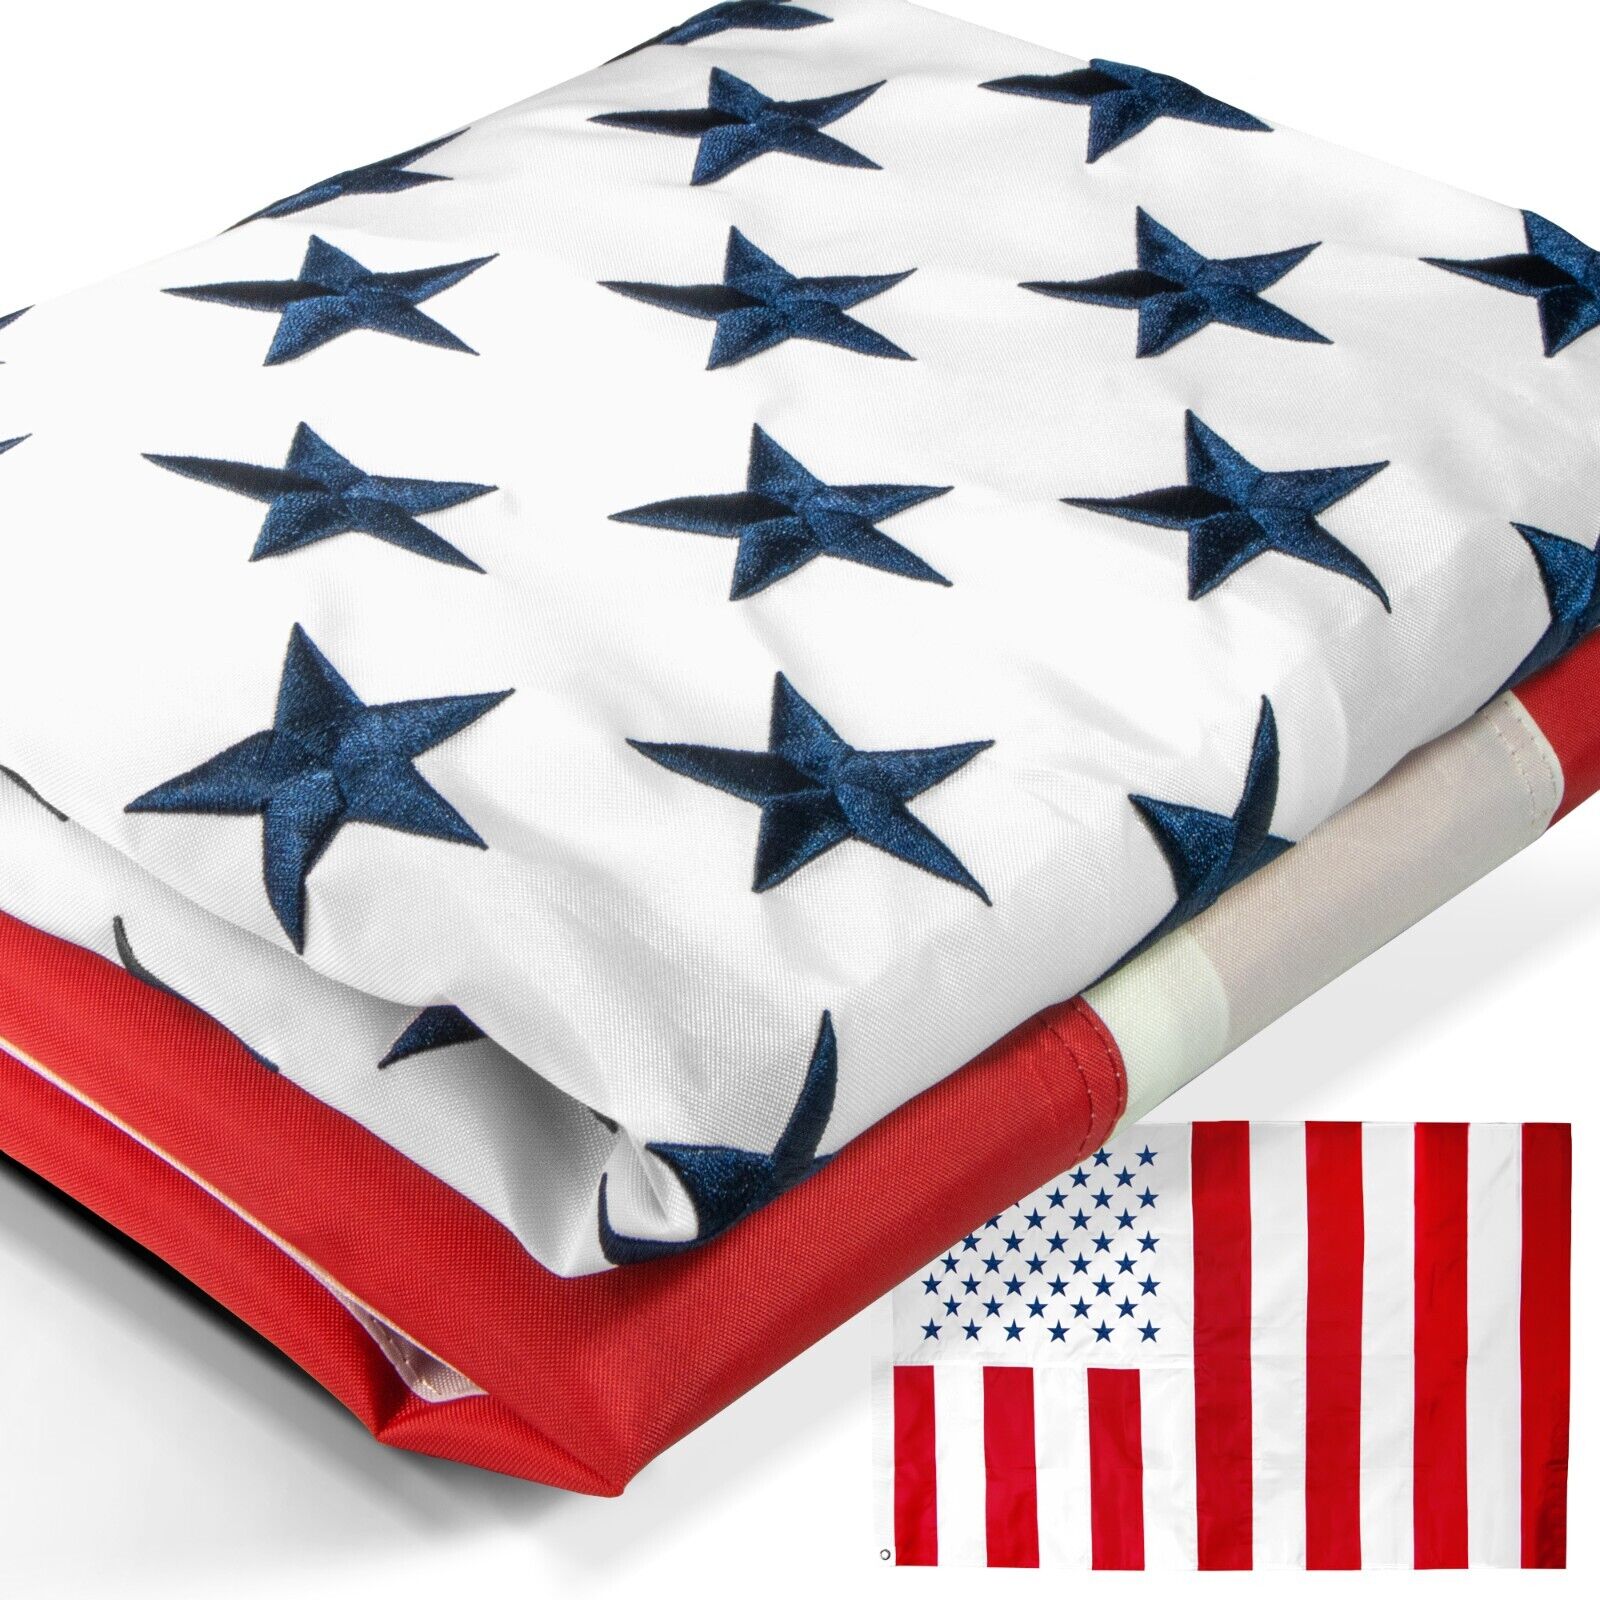 Anley USA Civil Peace Flag 3x5 Ft Nylon Embroidered American Civil Peace Flag